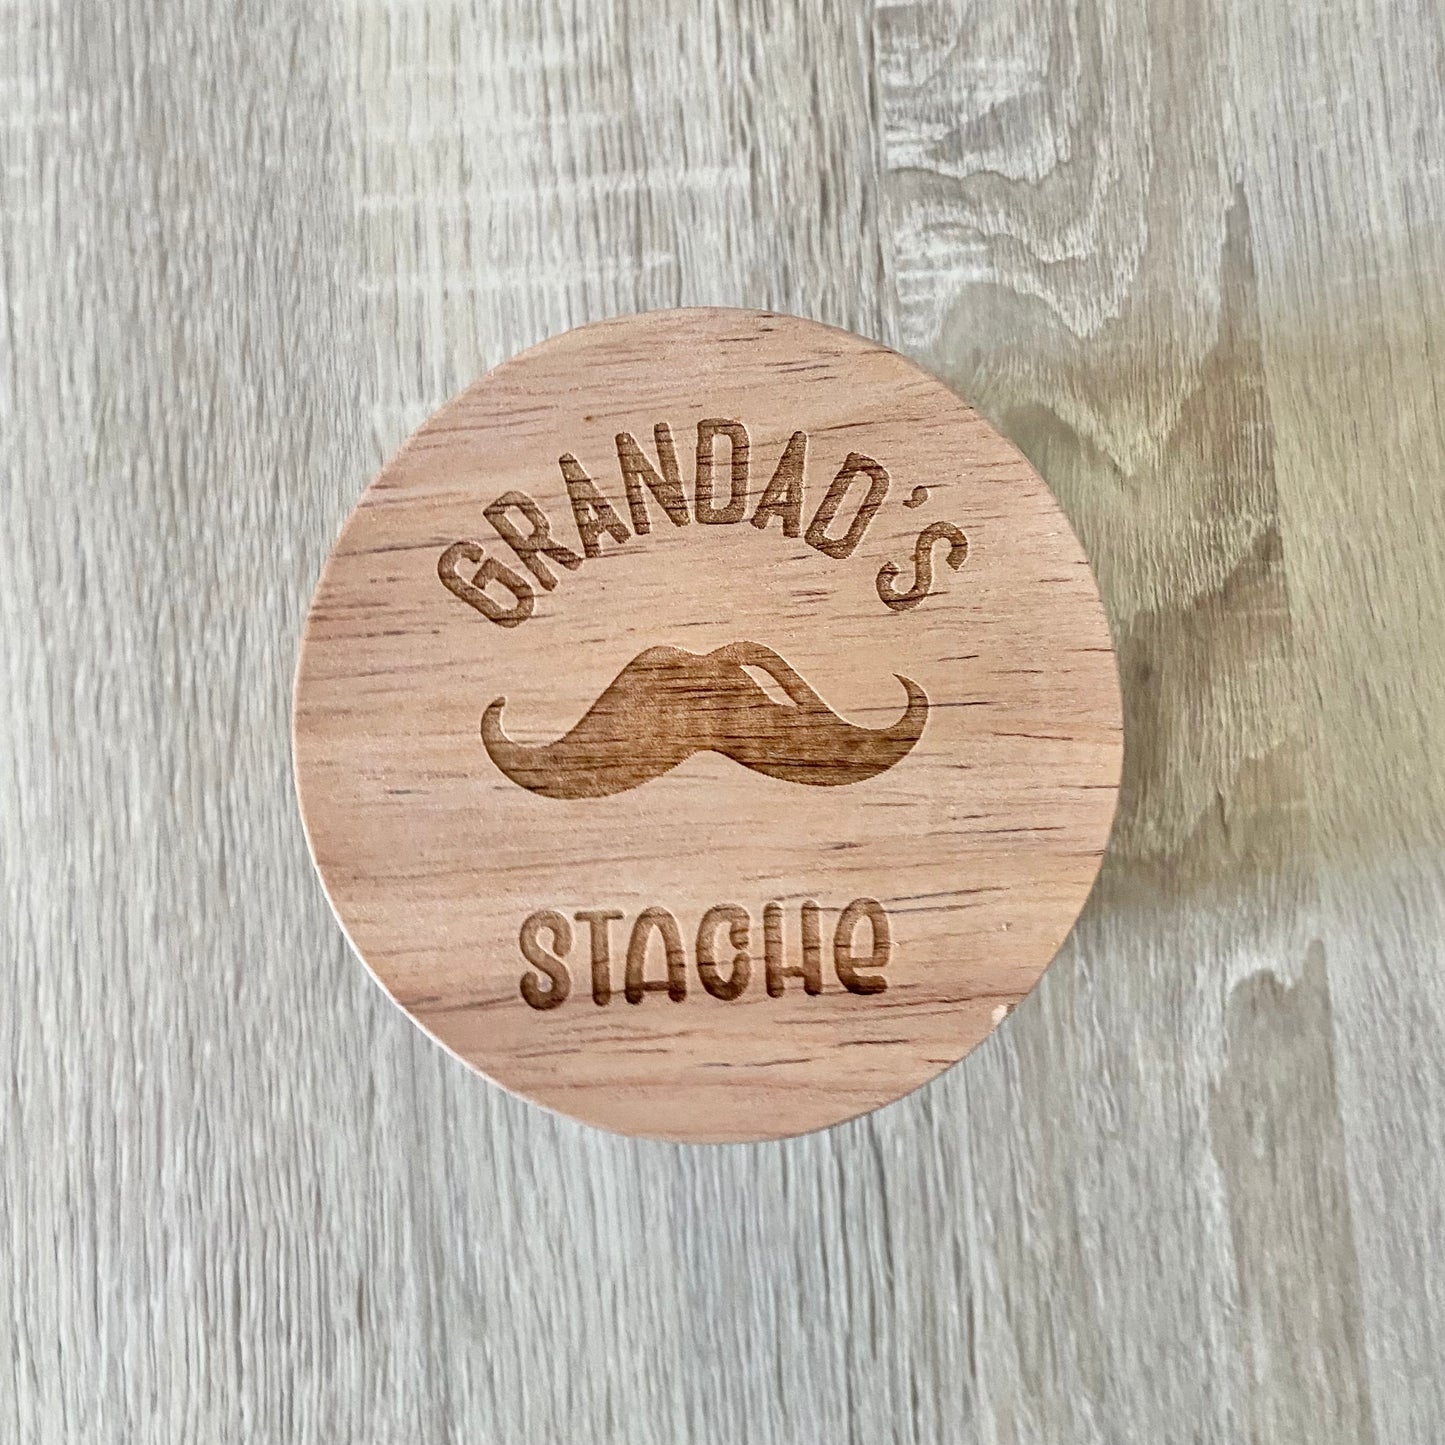 Grandad’s stache jar